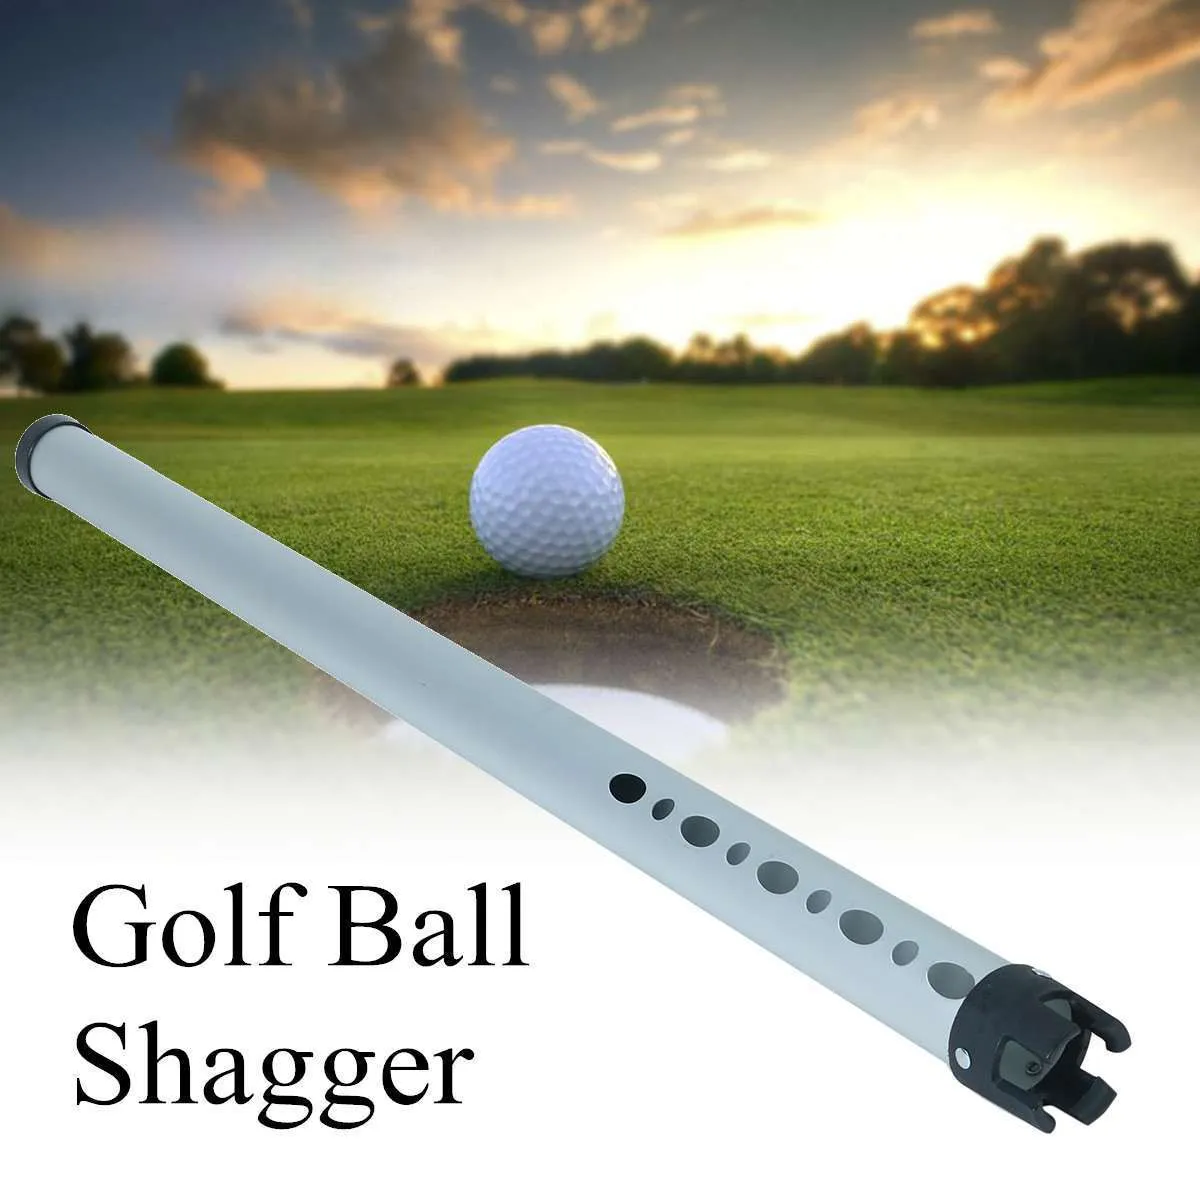 Portable de aluminio SHAG TUBE PRÁCTICA Golf Ball Picker Sostenga 23 bolas recogiendo bolas Almacenamiento de almacenamiento Accesorio de golf 98cm 22858294